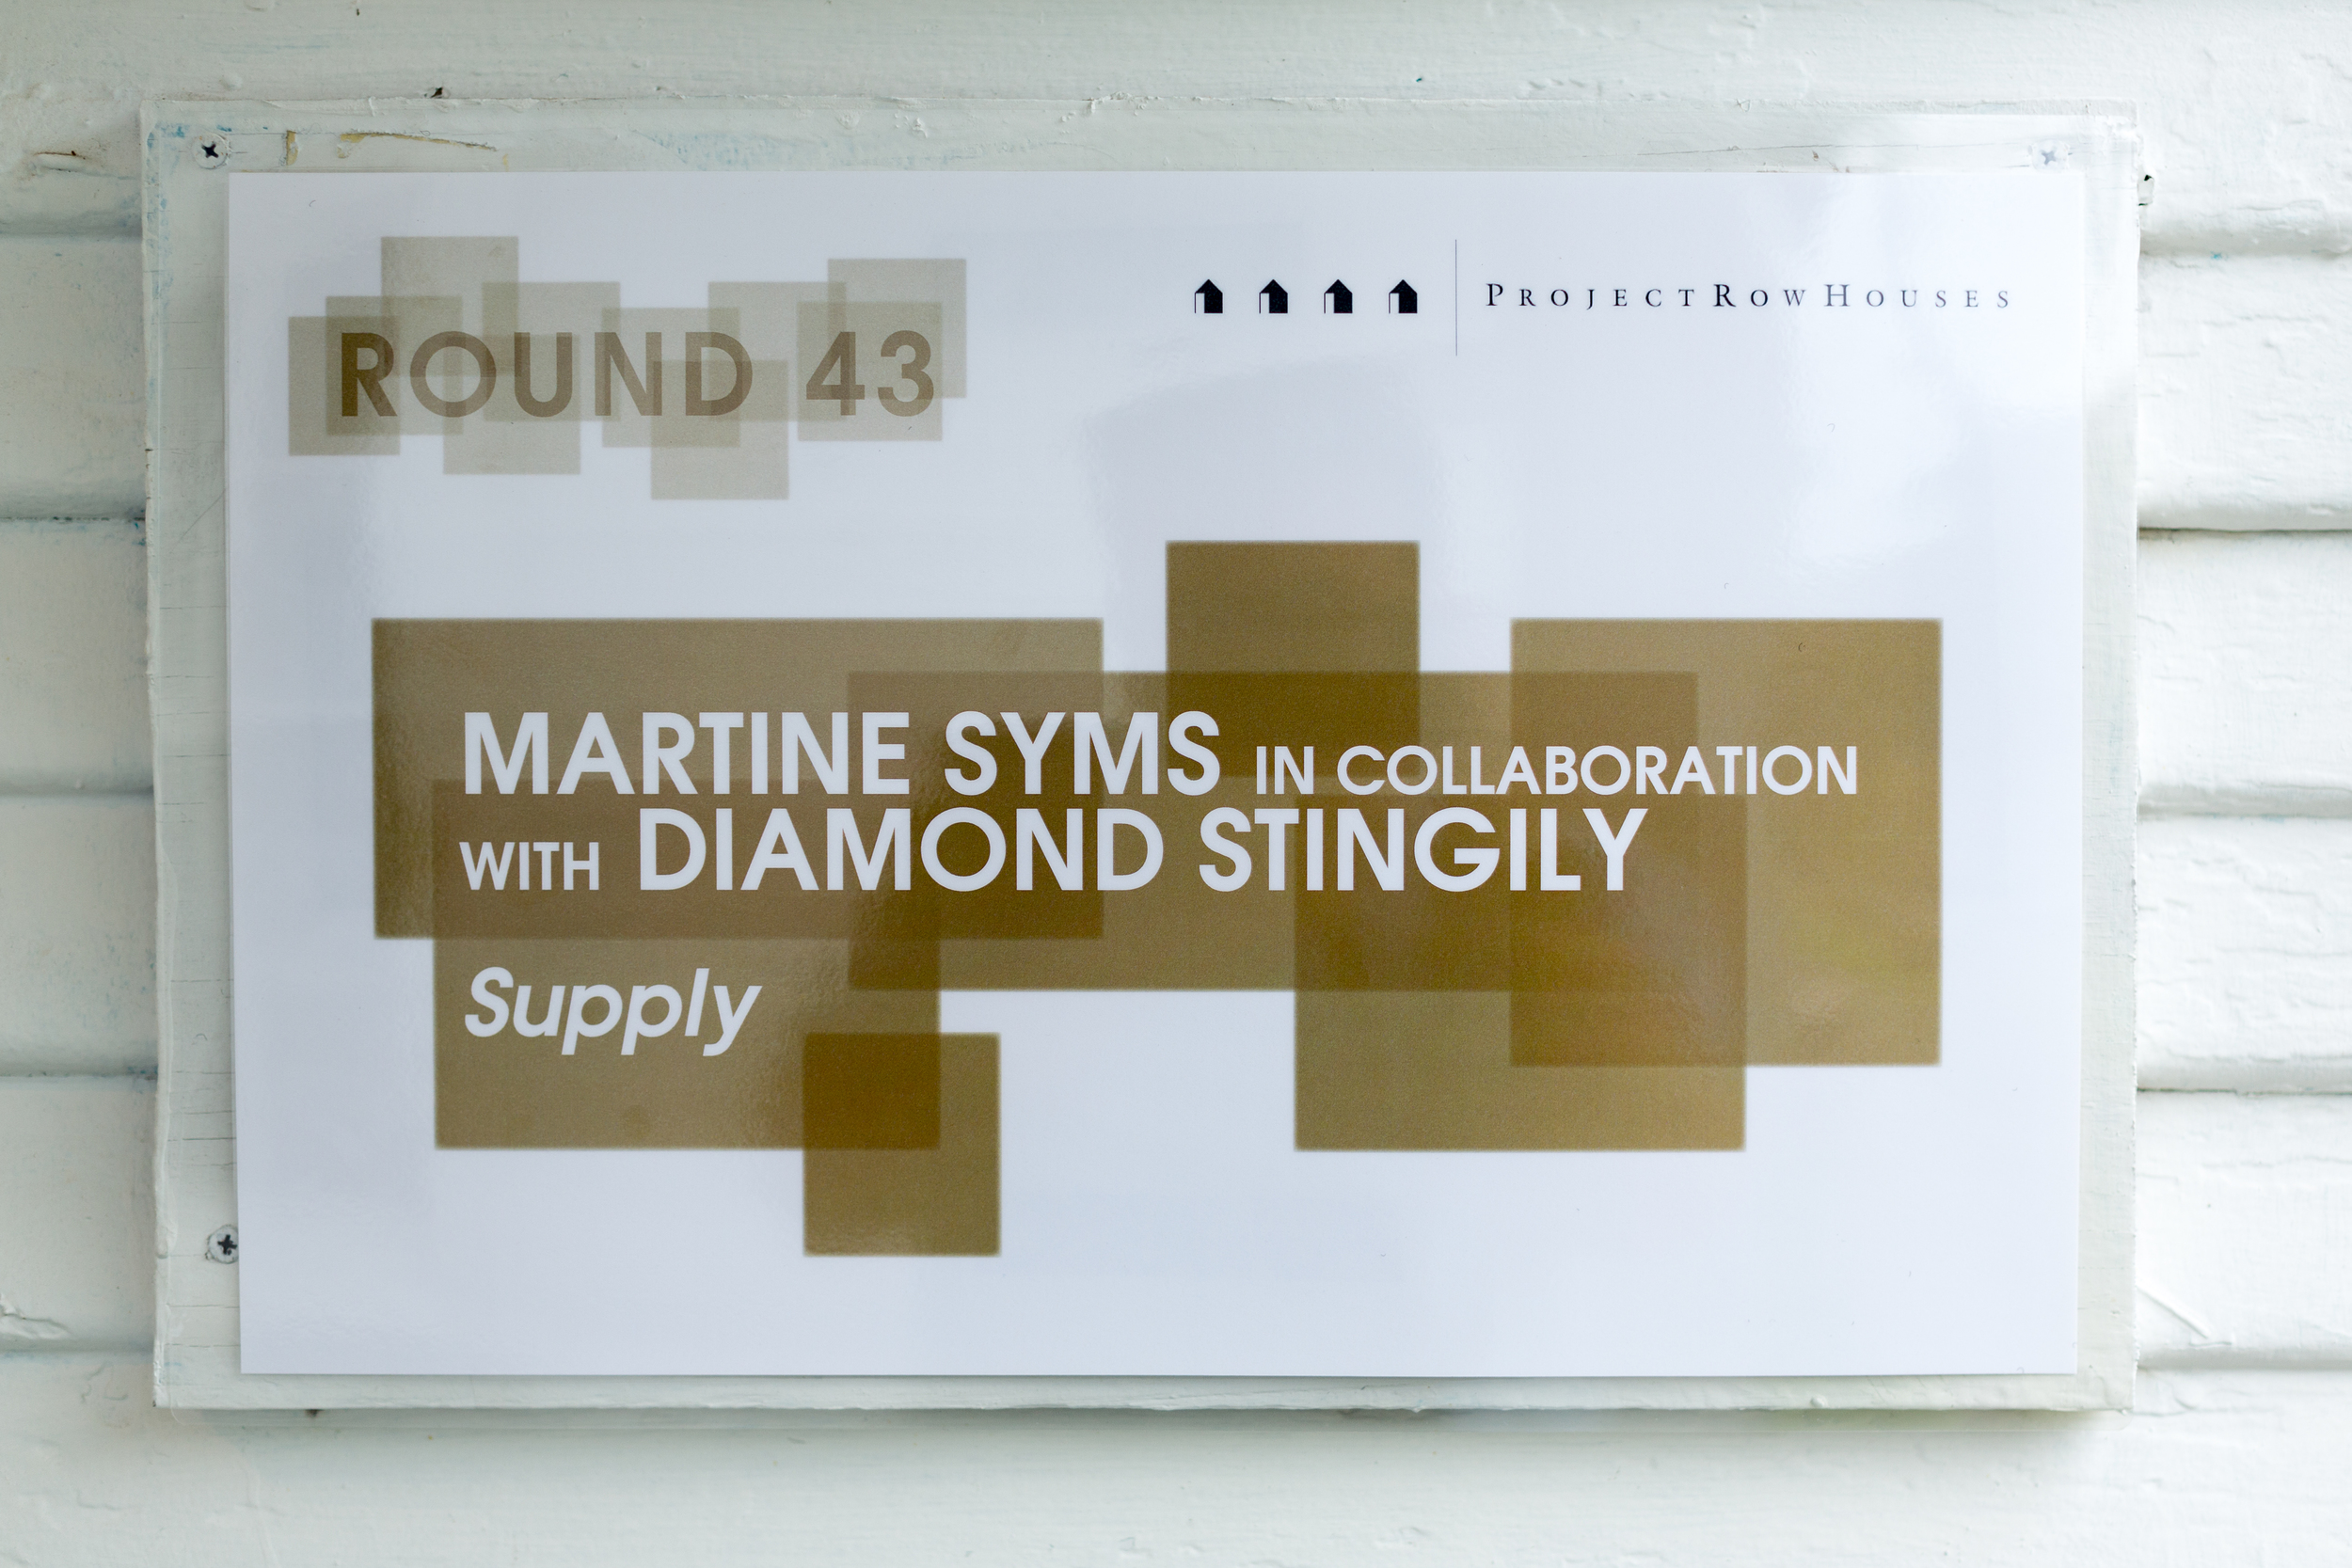  Supply , Martine Syms (in collaboration with Diamond Stingily) 2515 Holman St.&nbsp; 